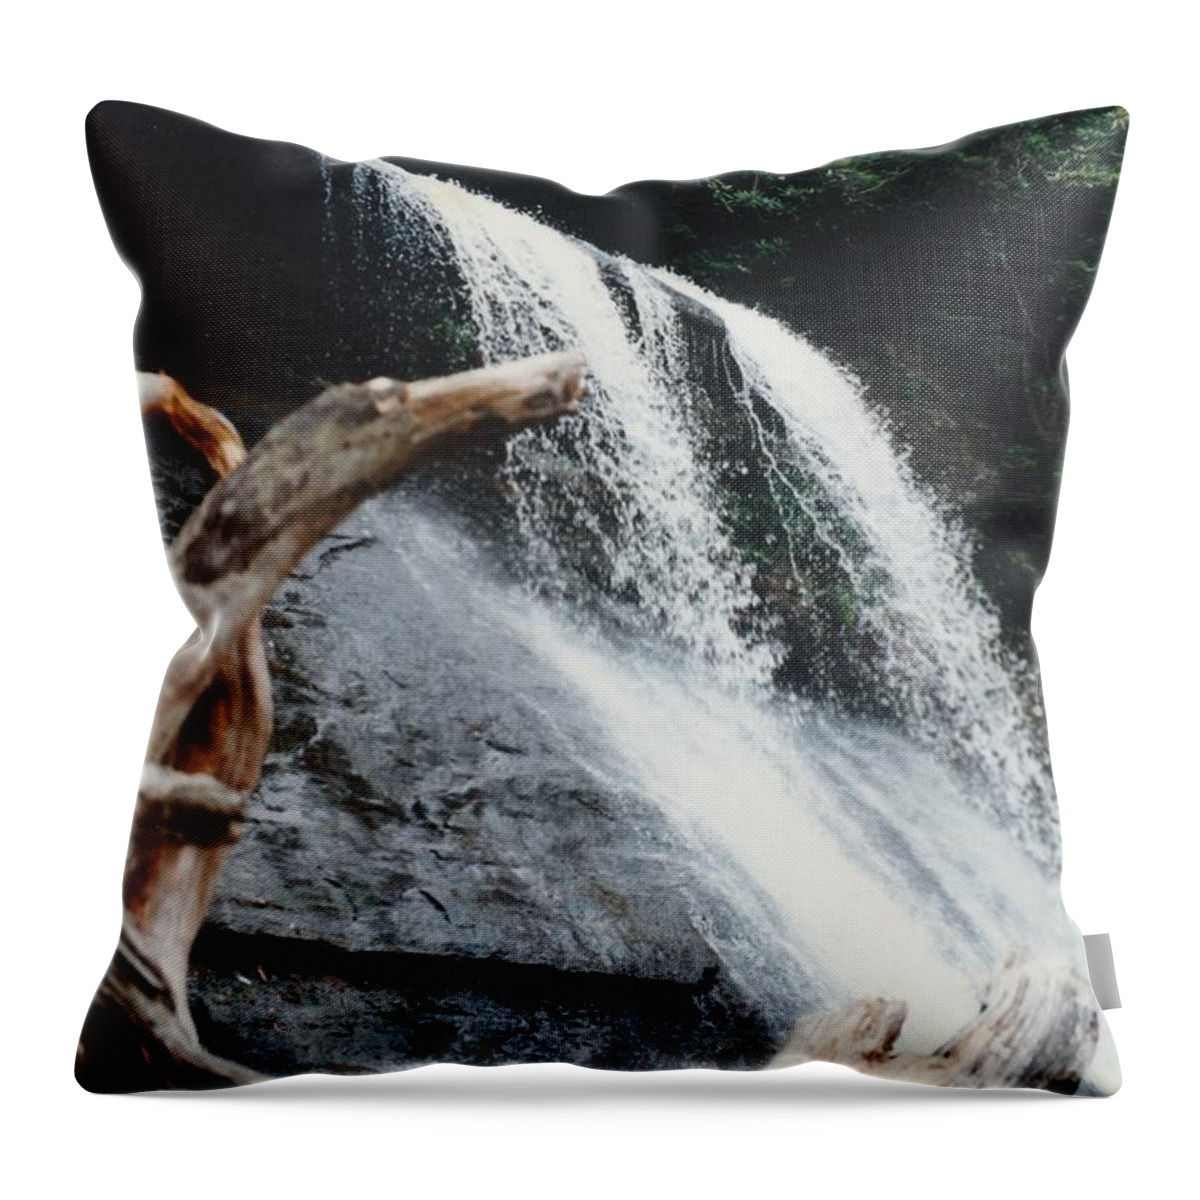 Waterfall Throw Pillow featuring the photograph Waterfall in the Smokies by Lois Tomaszewski